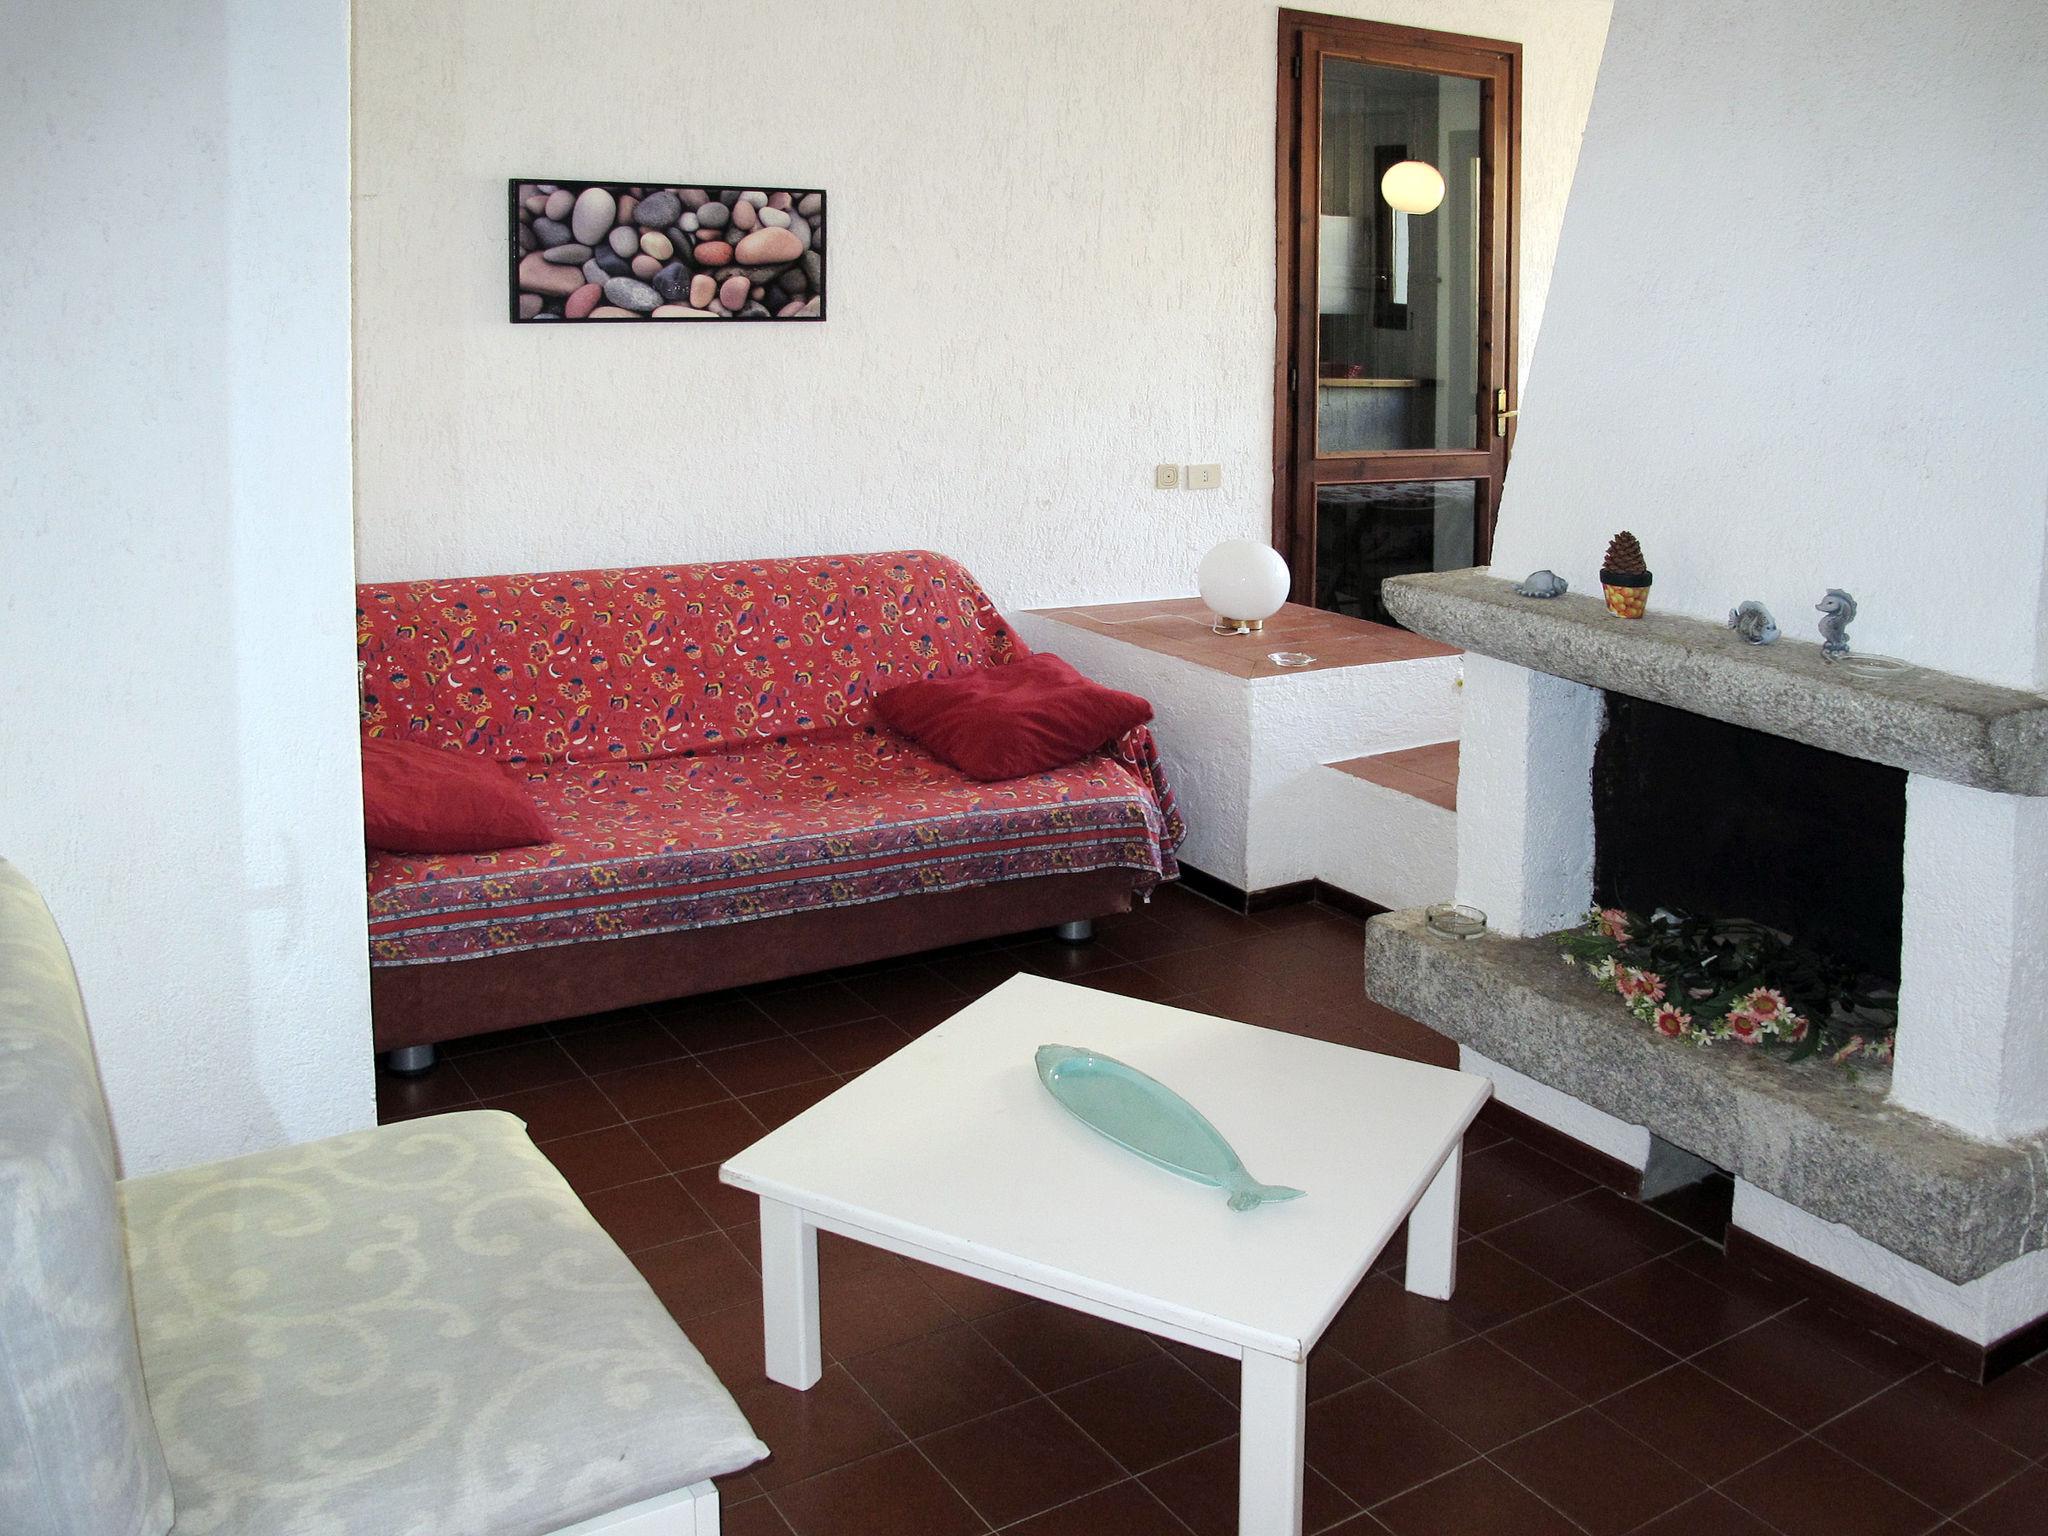 Photo 4 - Appartement de 2 chambres à Santa Teresa Gallura avec piscine et vues à la mer